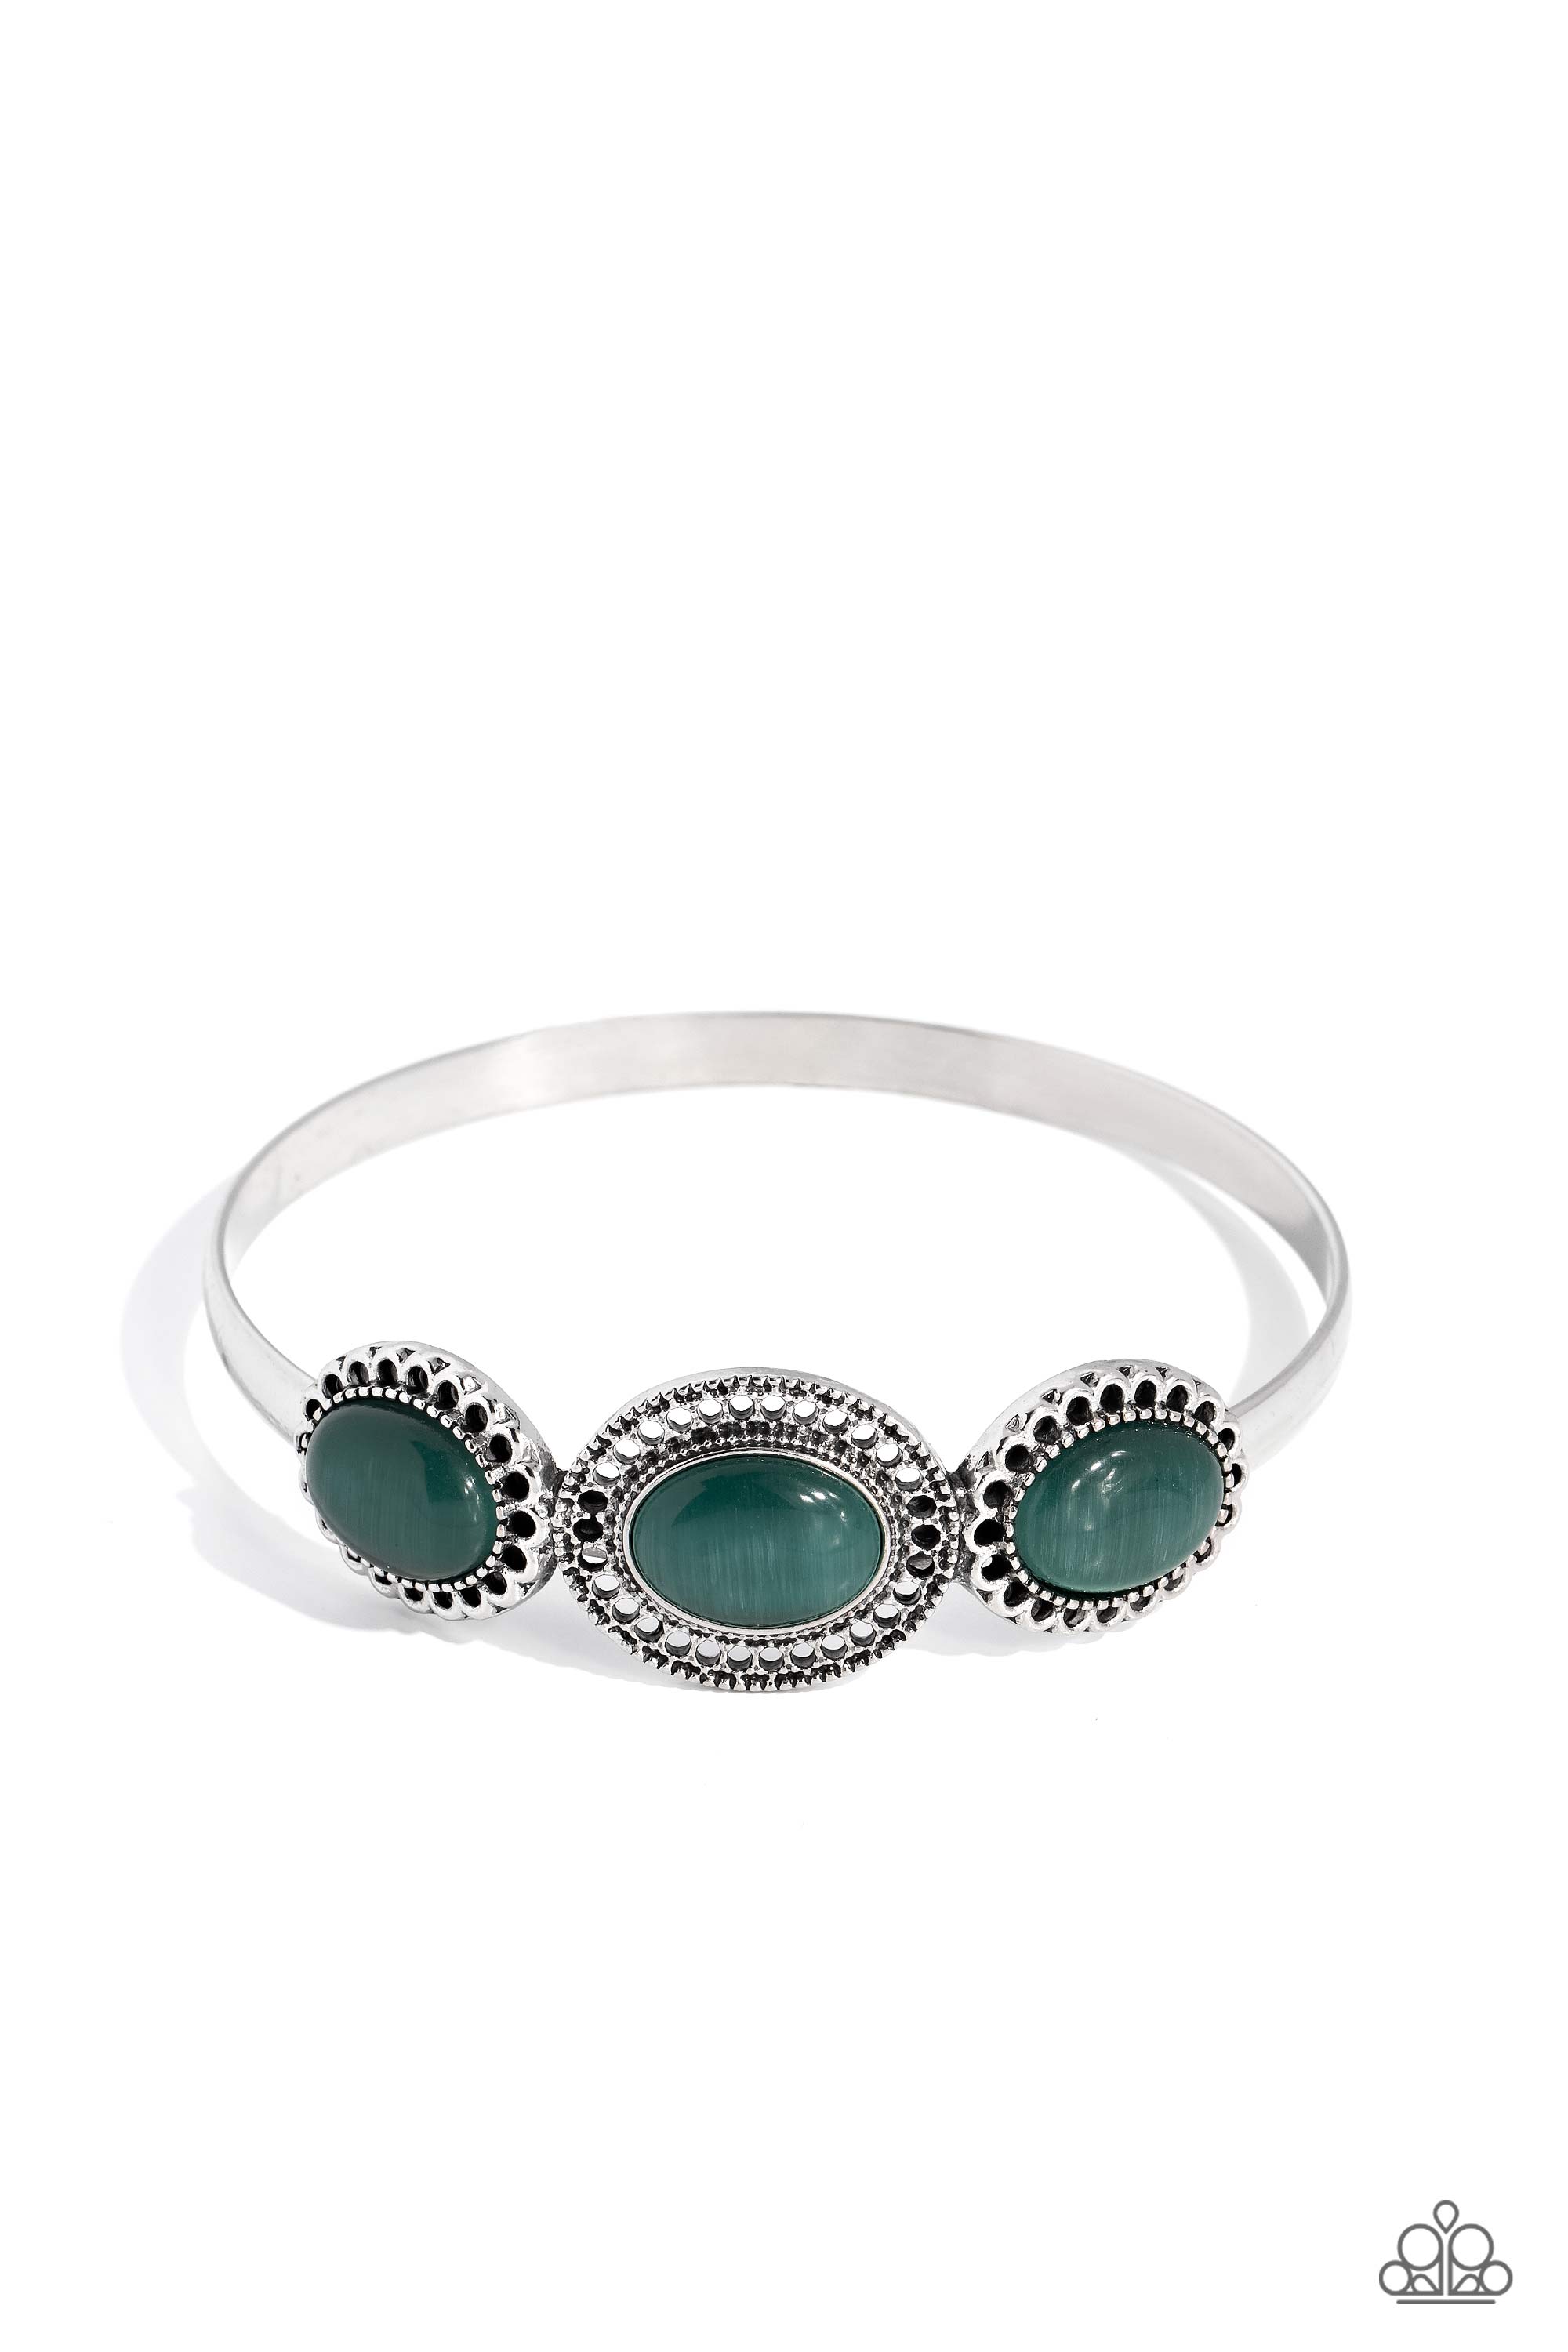 A DAYDREAM Come True Green Cat's Eye Stone Bangle Bracelet - Paparazzi Accessories- lightbox - CarasShop.com - $5 Jewelry by Cara Jewels